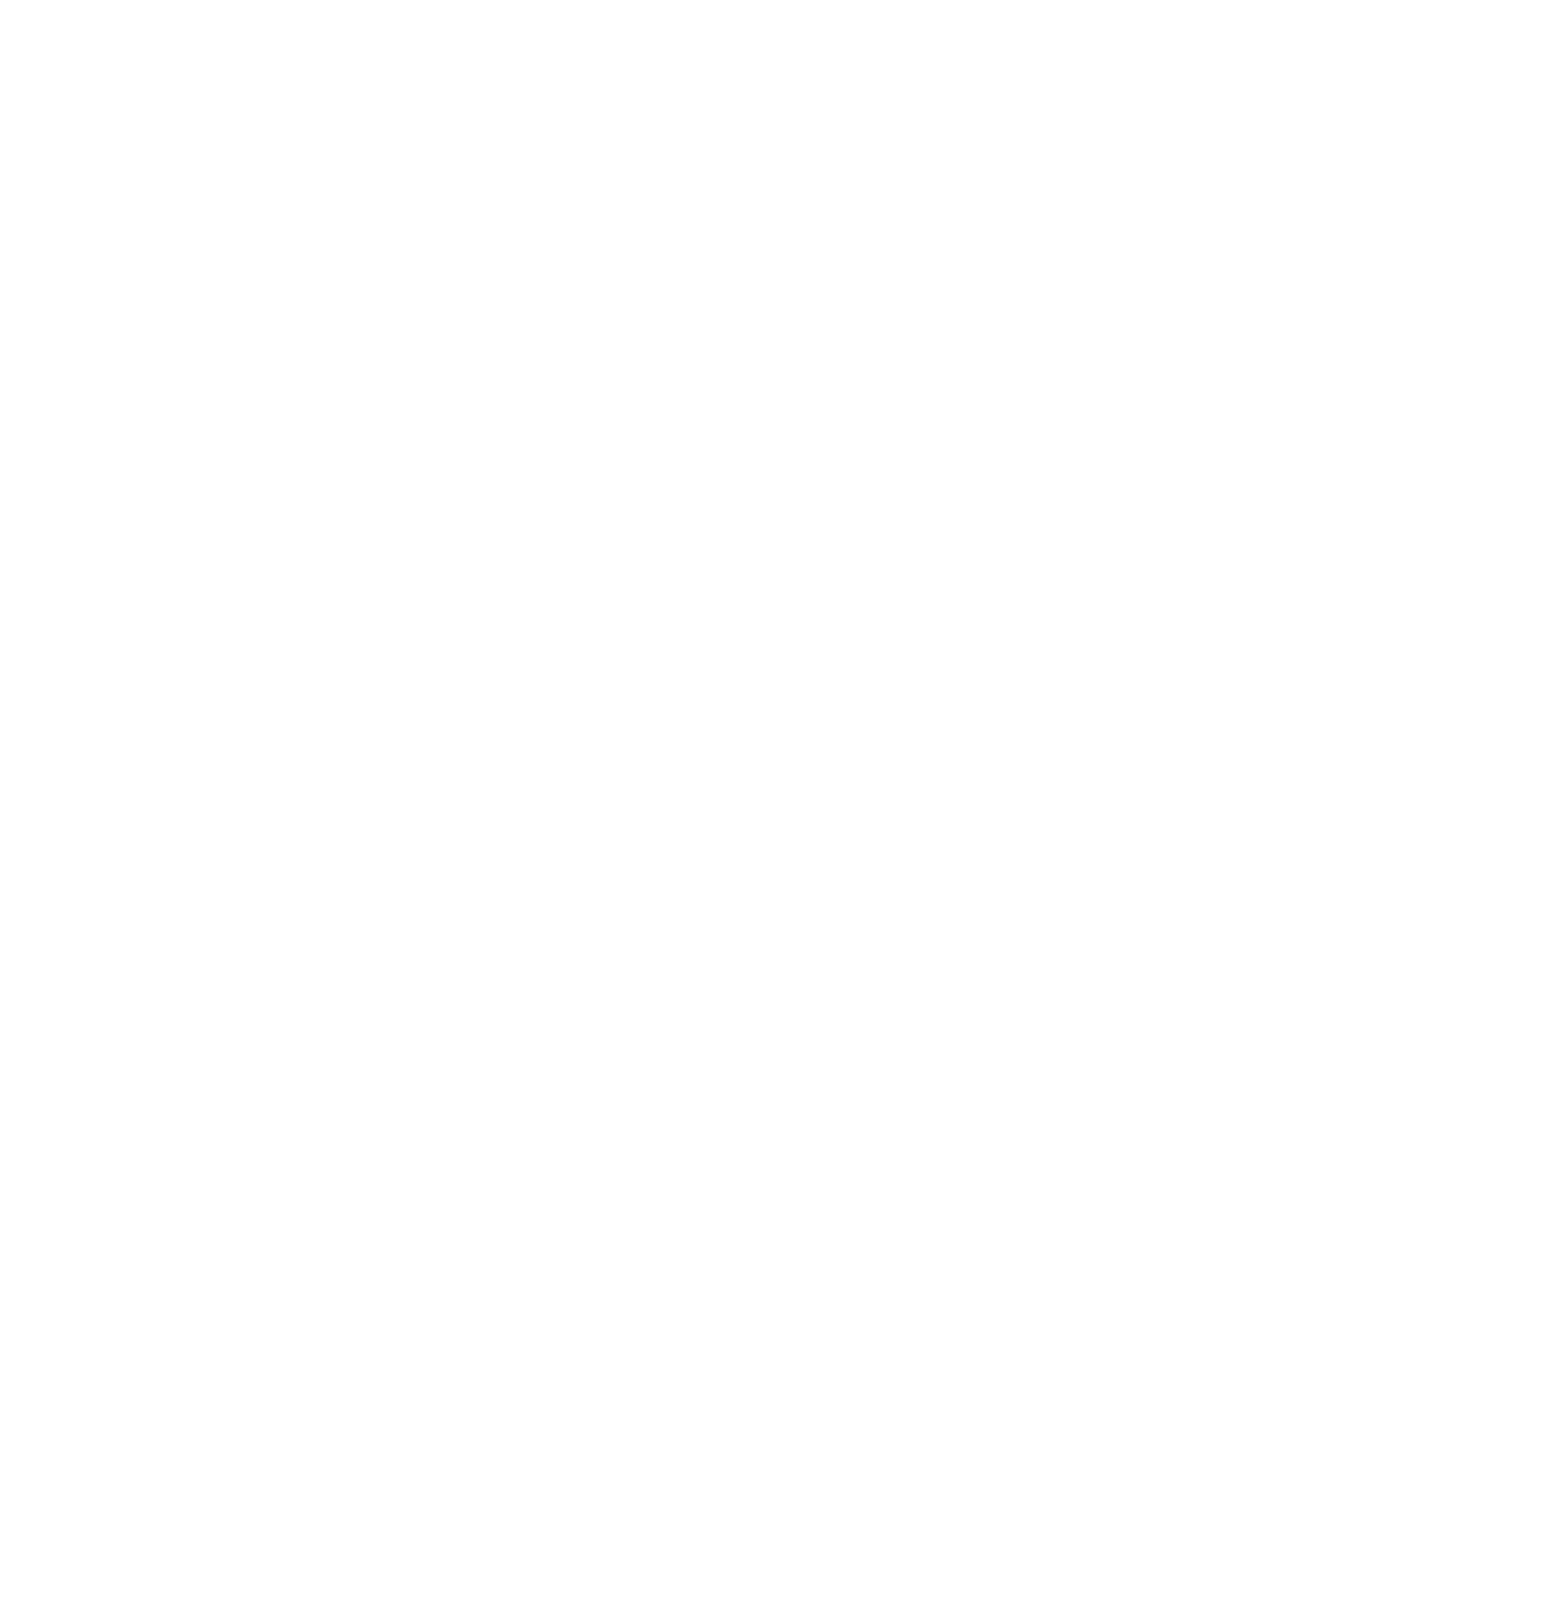 DAQO New Energy logo for dark backgrounds (transparent PNG)